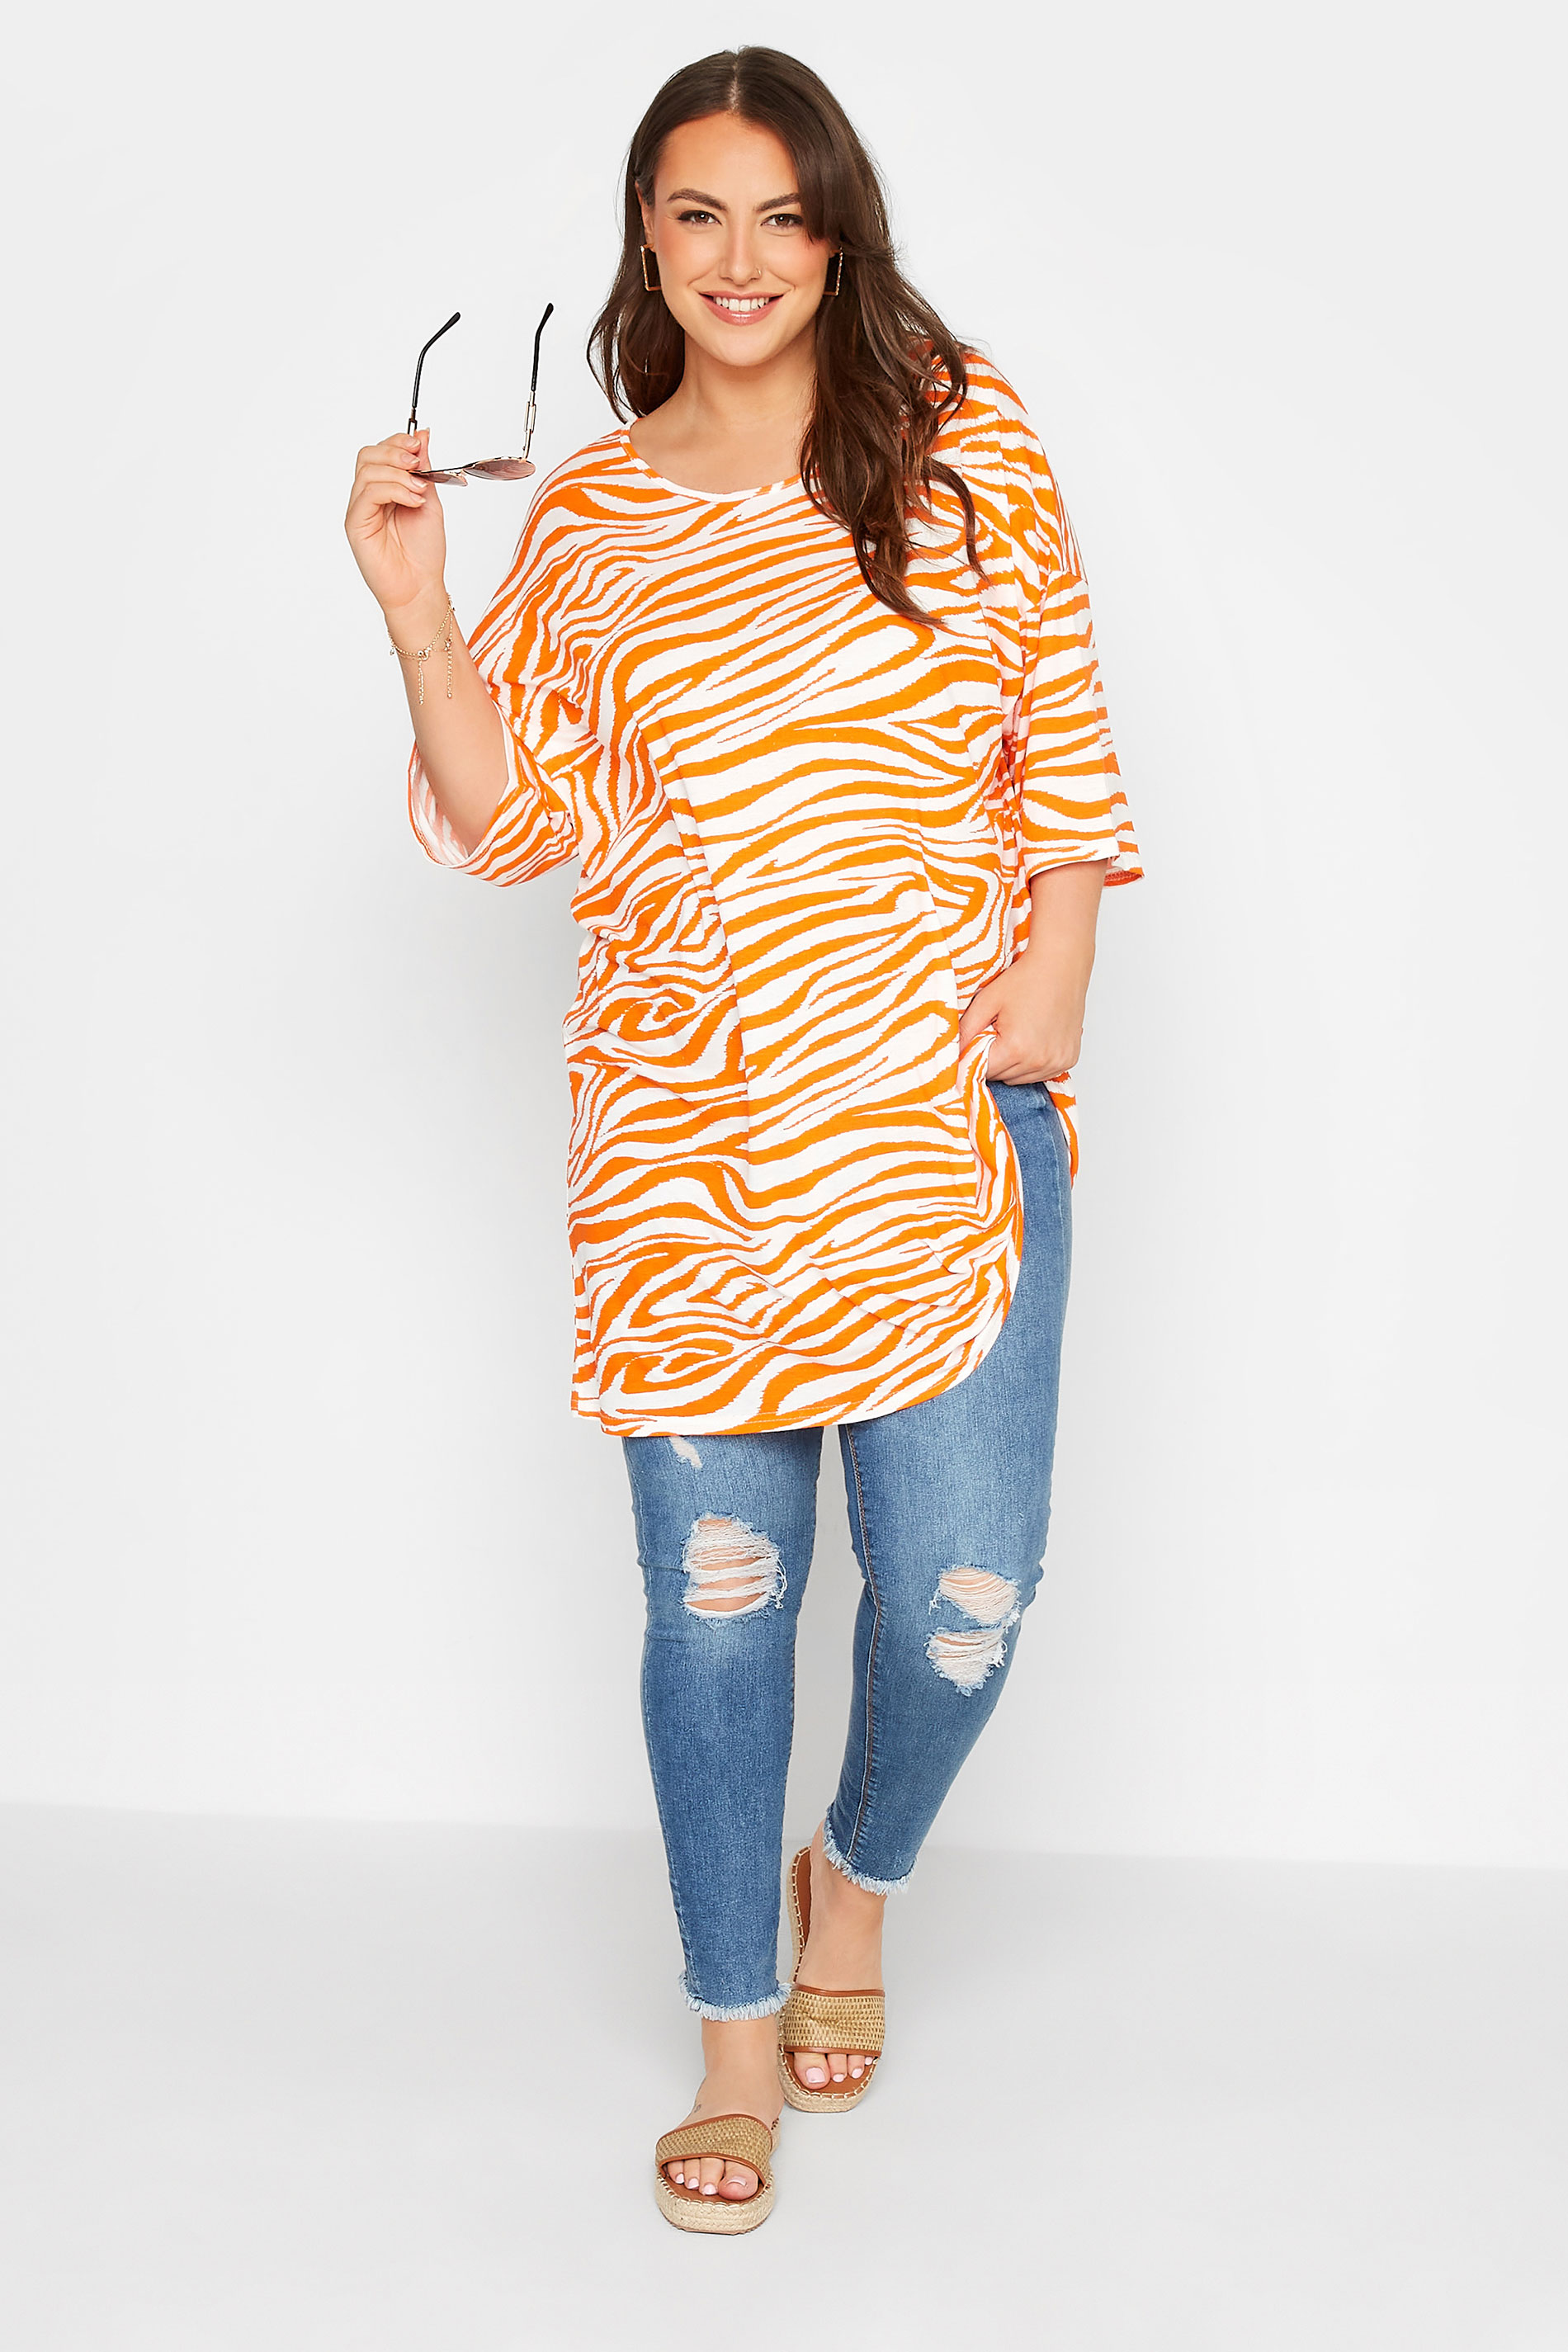 Grande taille  Tops Grande taille  T-Shirts | T-Shirt Orange Zébré Design Oversize - SL24009